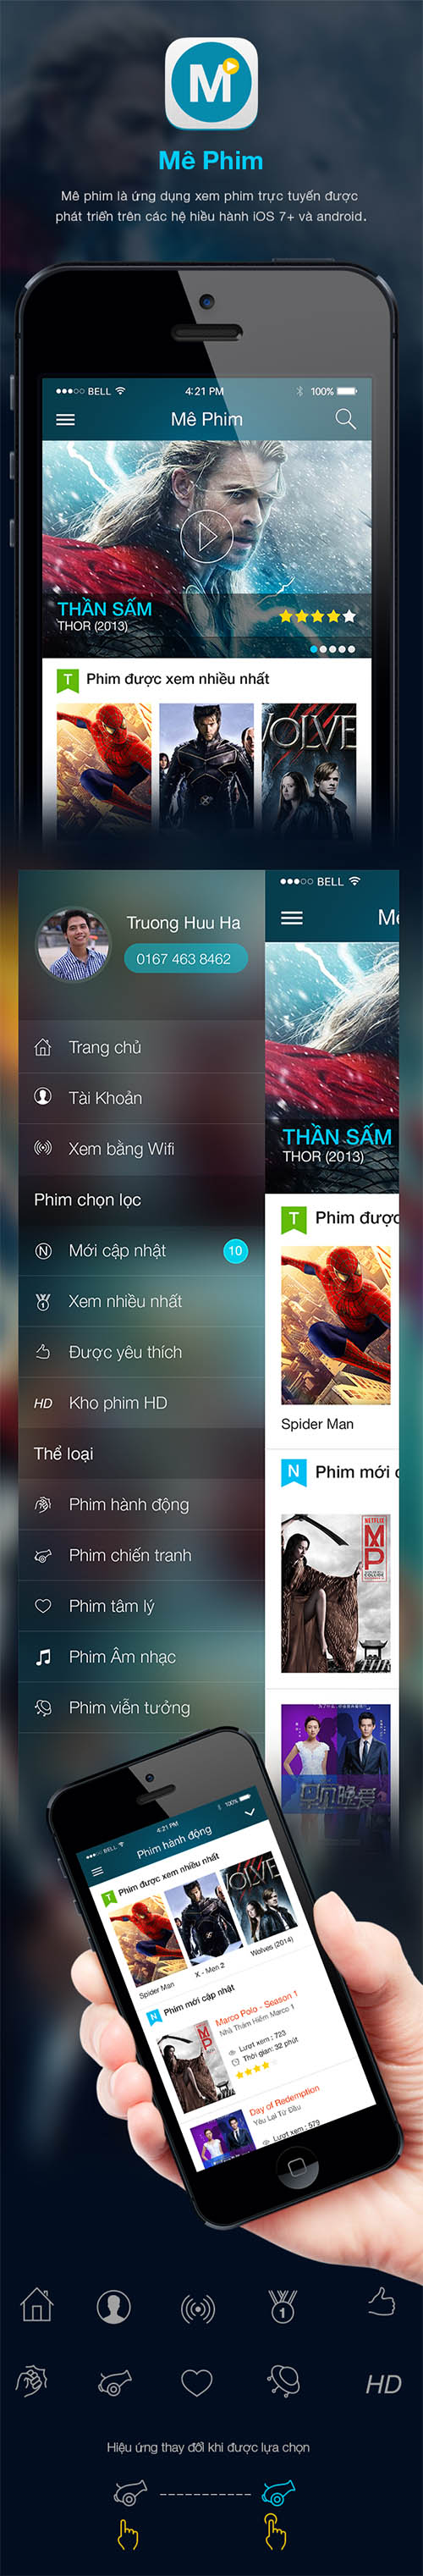 MePhim - Film App By Ha Truong